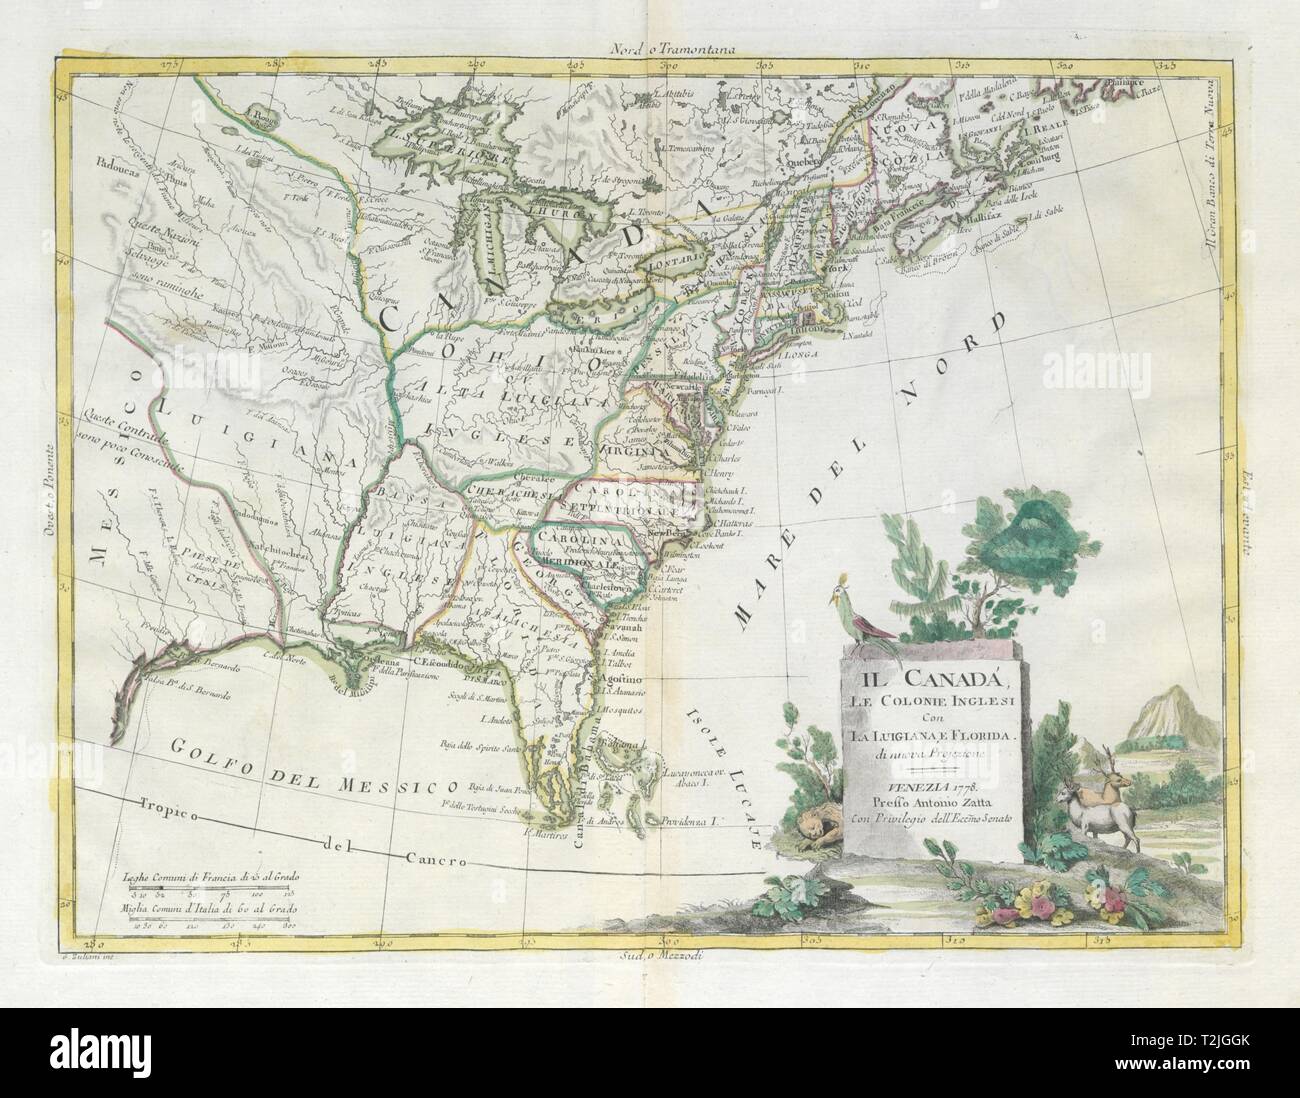 'Il Kanada, le Colonie Inglesi con la Luigiana, e Florida". USA. ZATTA 1779 Karte Stockfoto